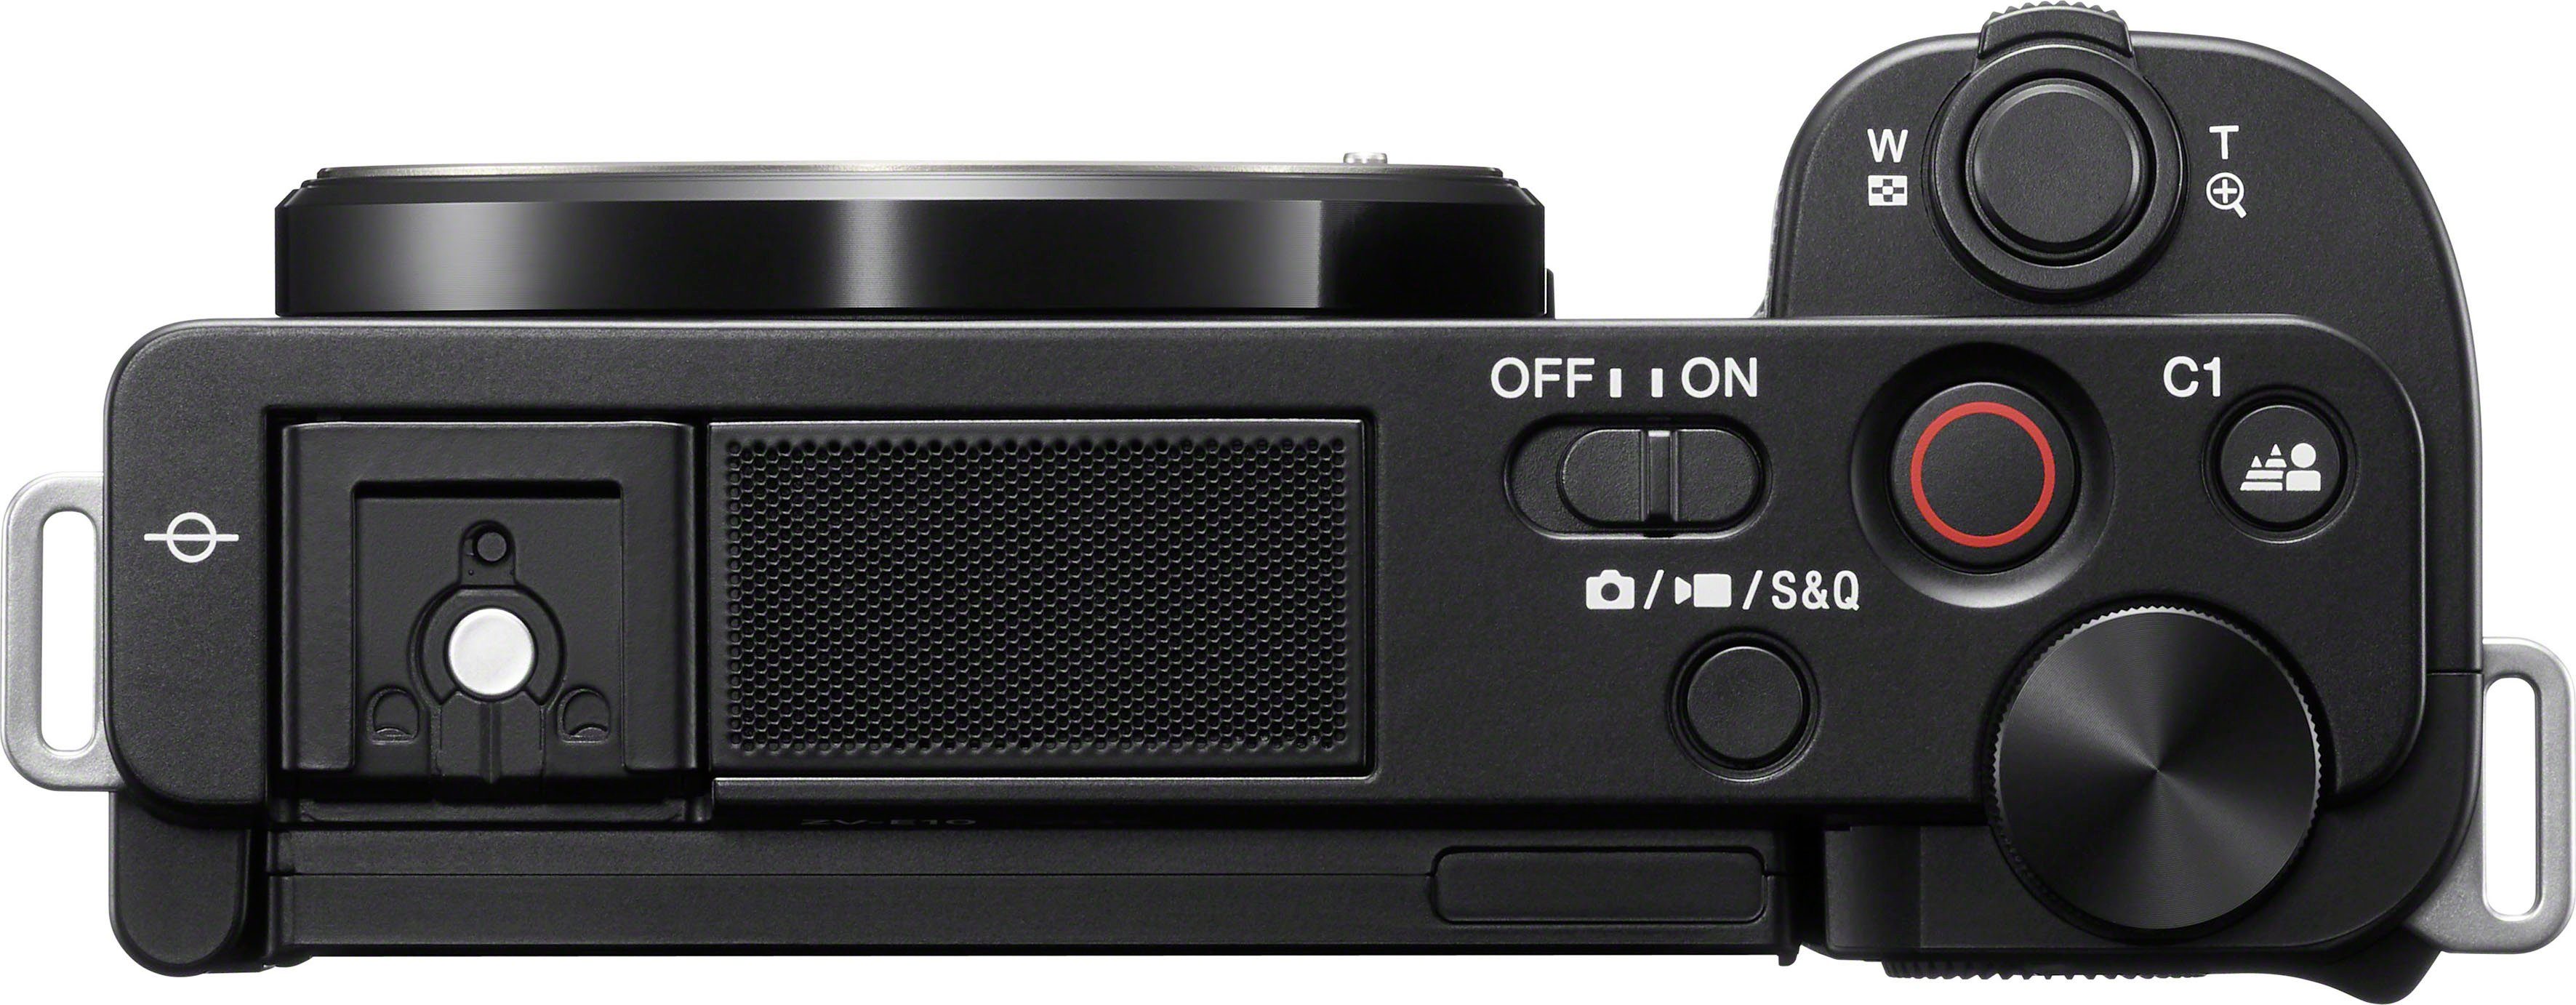 Objektiv) ZV-E10L - 50 F3.5 mit (SELP1650), MP, schwenkbarem Vlog-Kamera Systemkamera 16 Sony Bluetooth, OSS (WiFi), inkl. SEL16-50 Display - 24,2 5.6 PZ (E WLAN mm